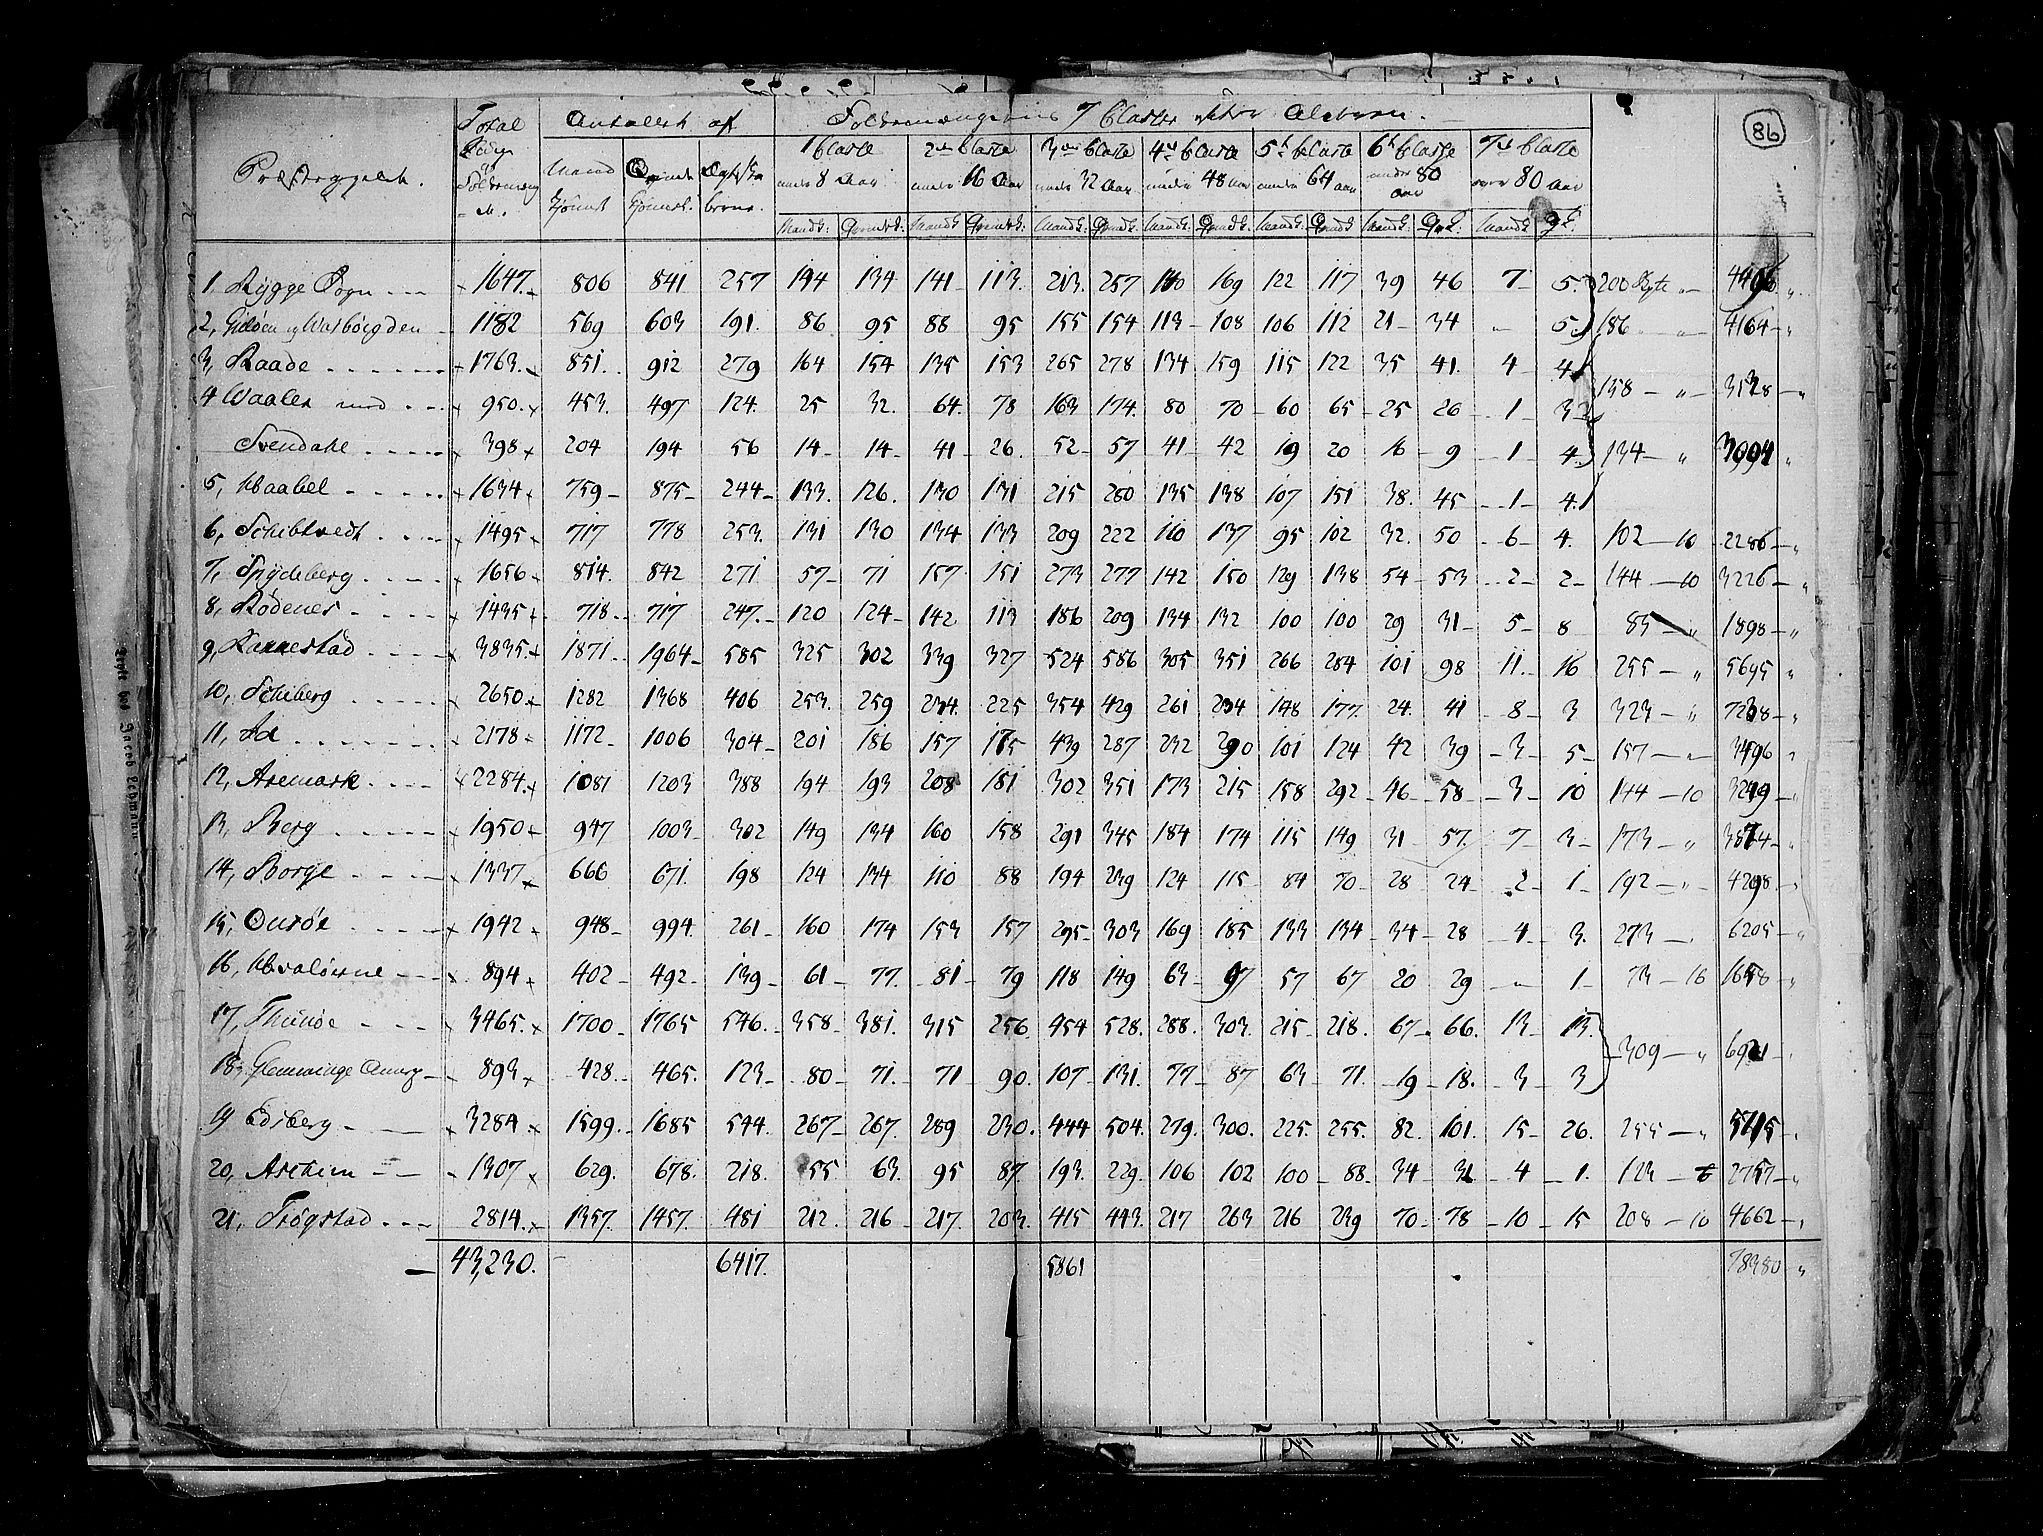 RA, Census 1815, vol. 1: Akershus stift and Kristiansand stift, 1815, p. 57